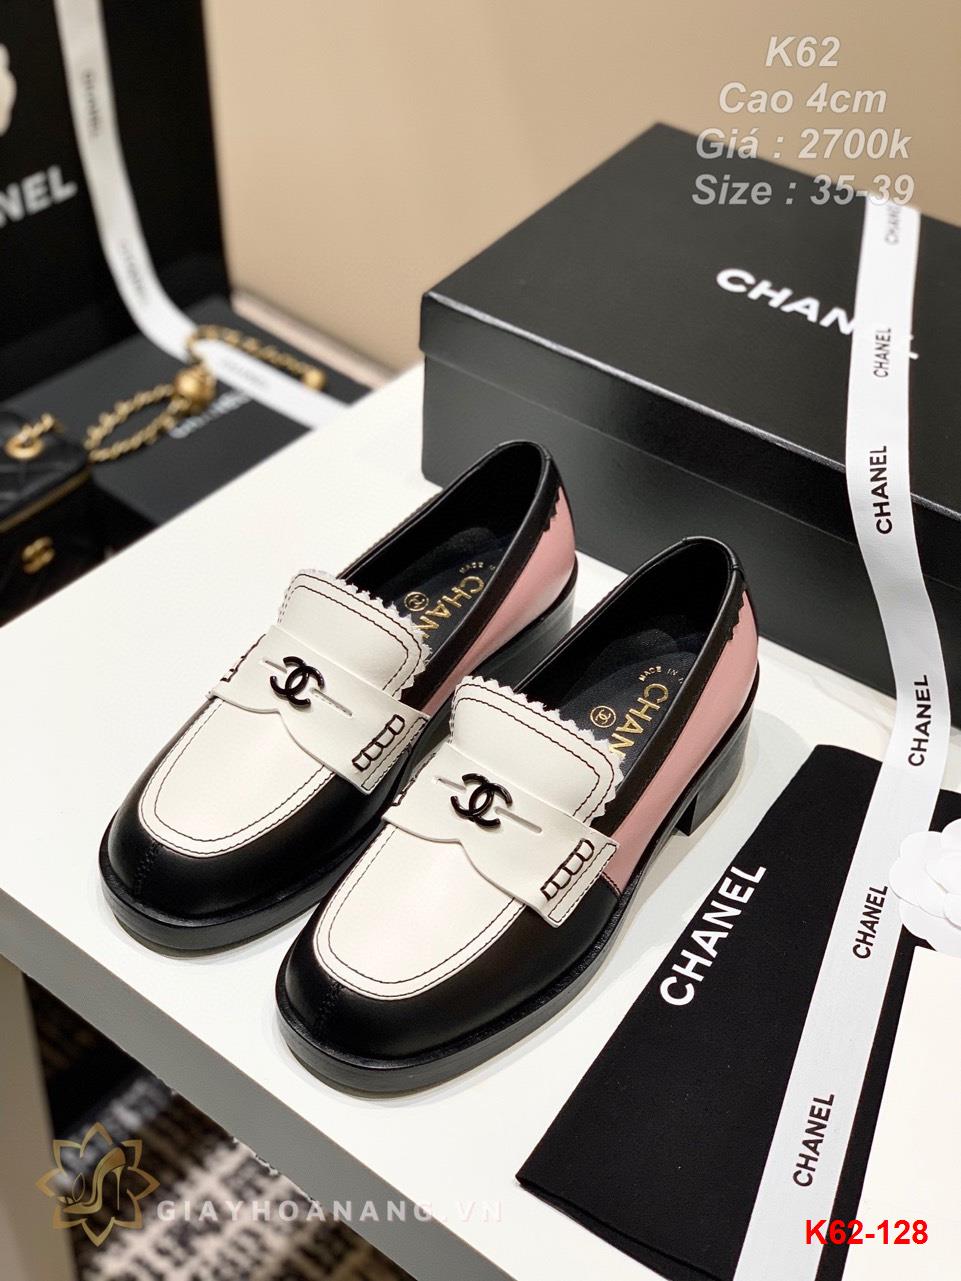 K62-128 Chanel giày cao 4cm siêu cấp